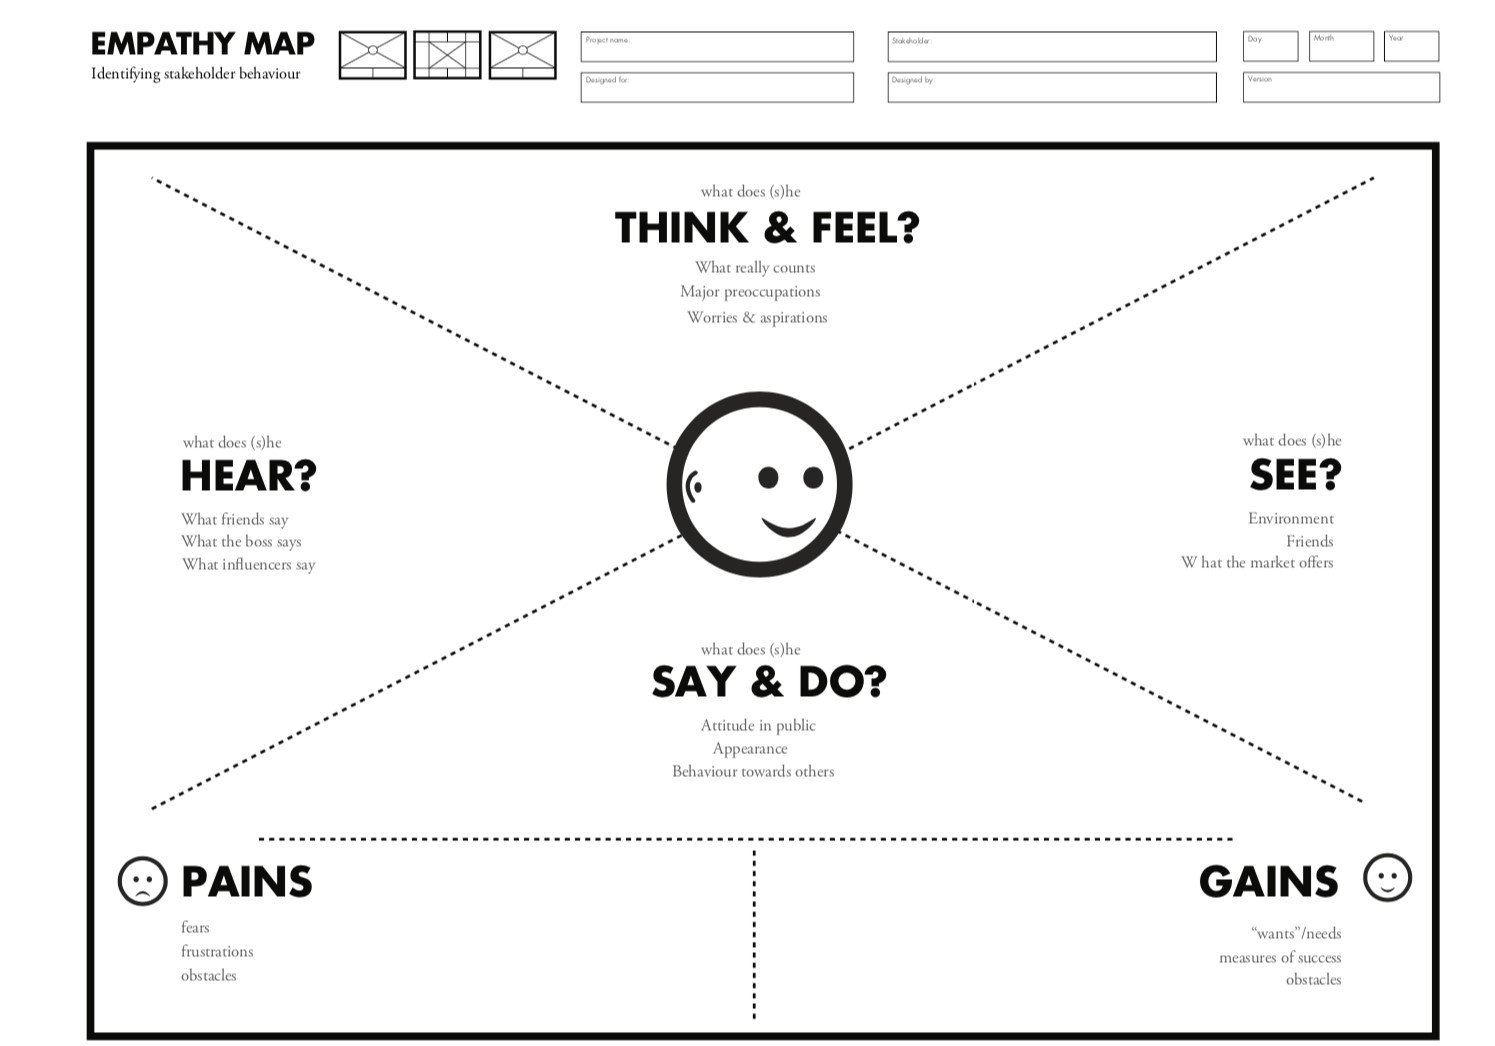 Characteristics of an empathy map